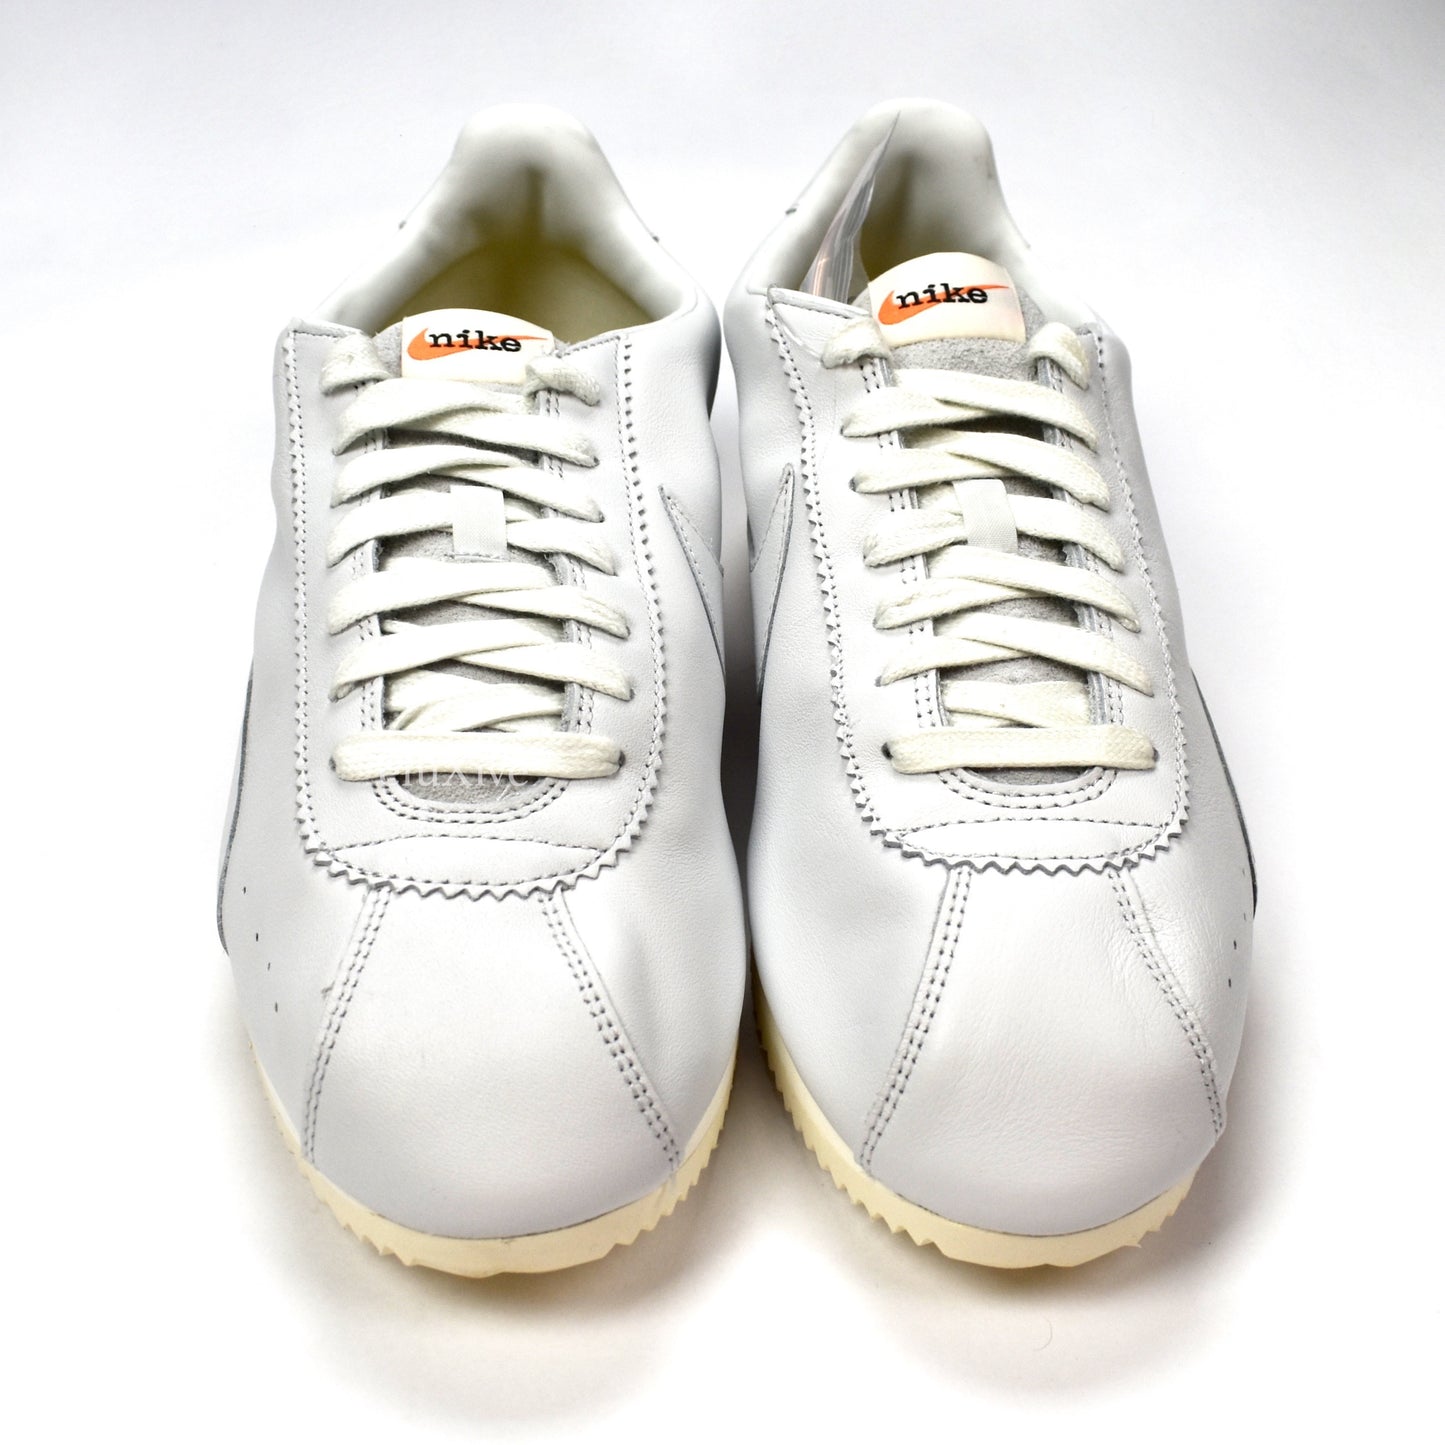 Nike - Cortez Classic KM QS (Off-White)